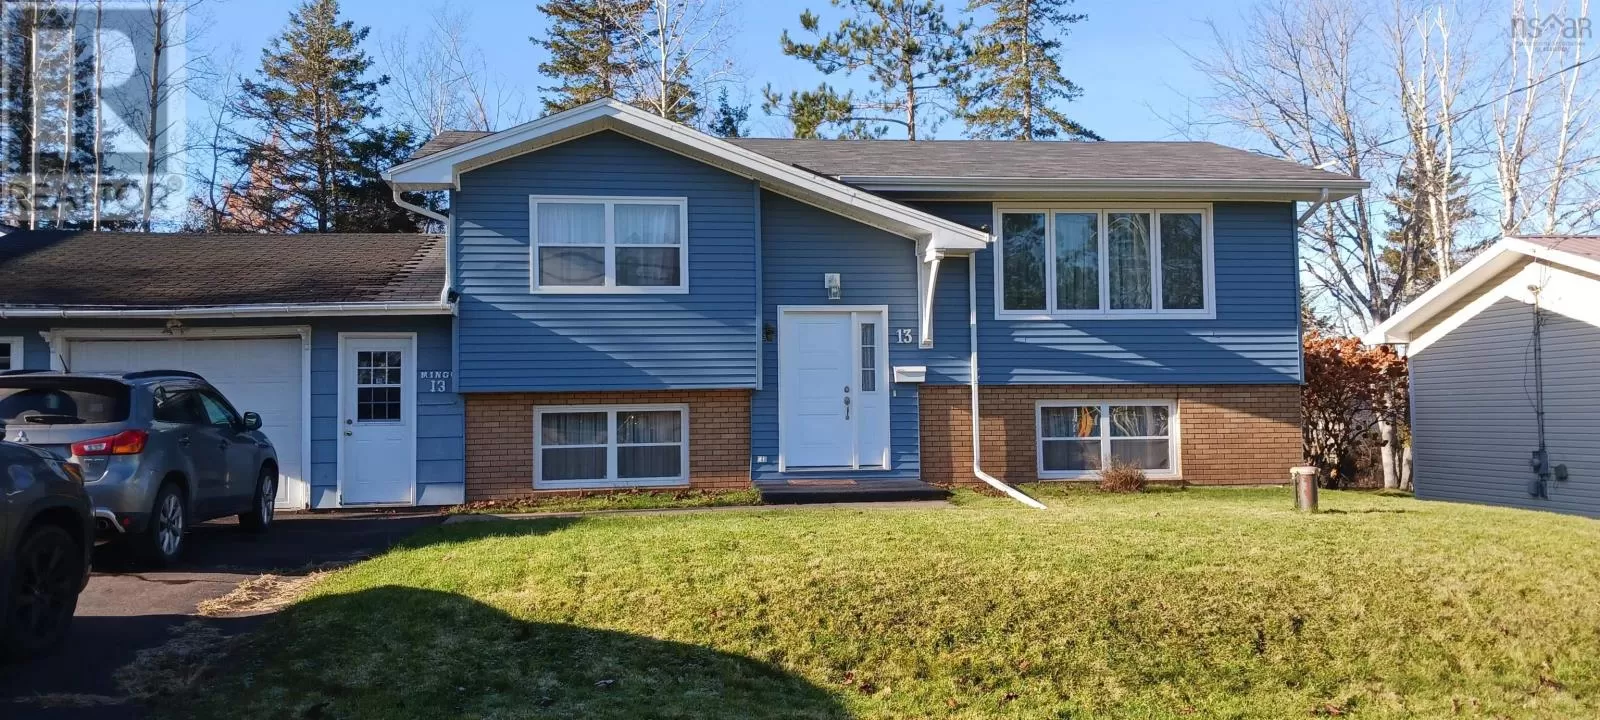 House for rent: 13 Evergreen Drive, Salmon River, Nova Scotia B2N 5J2